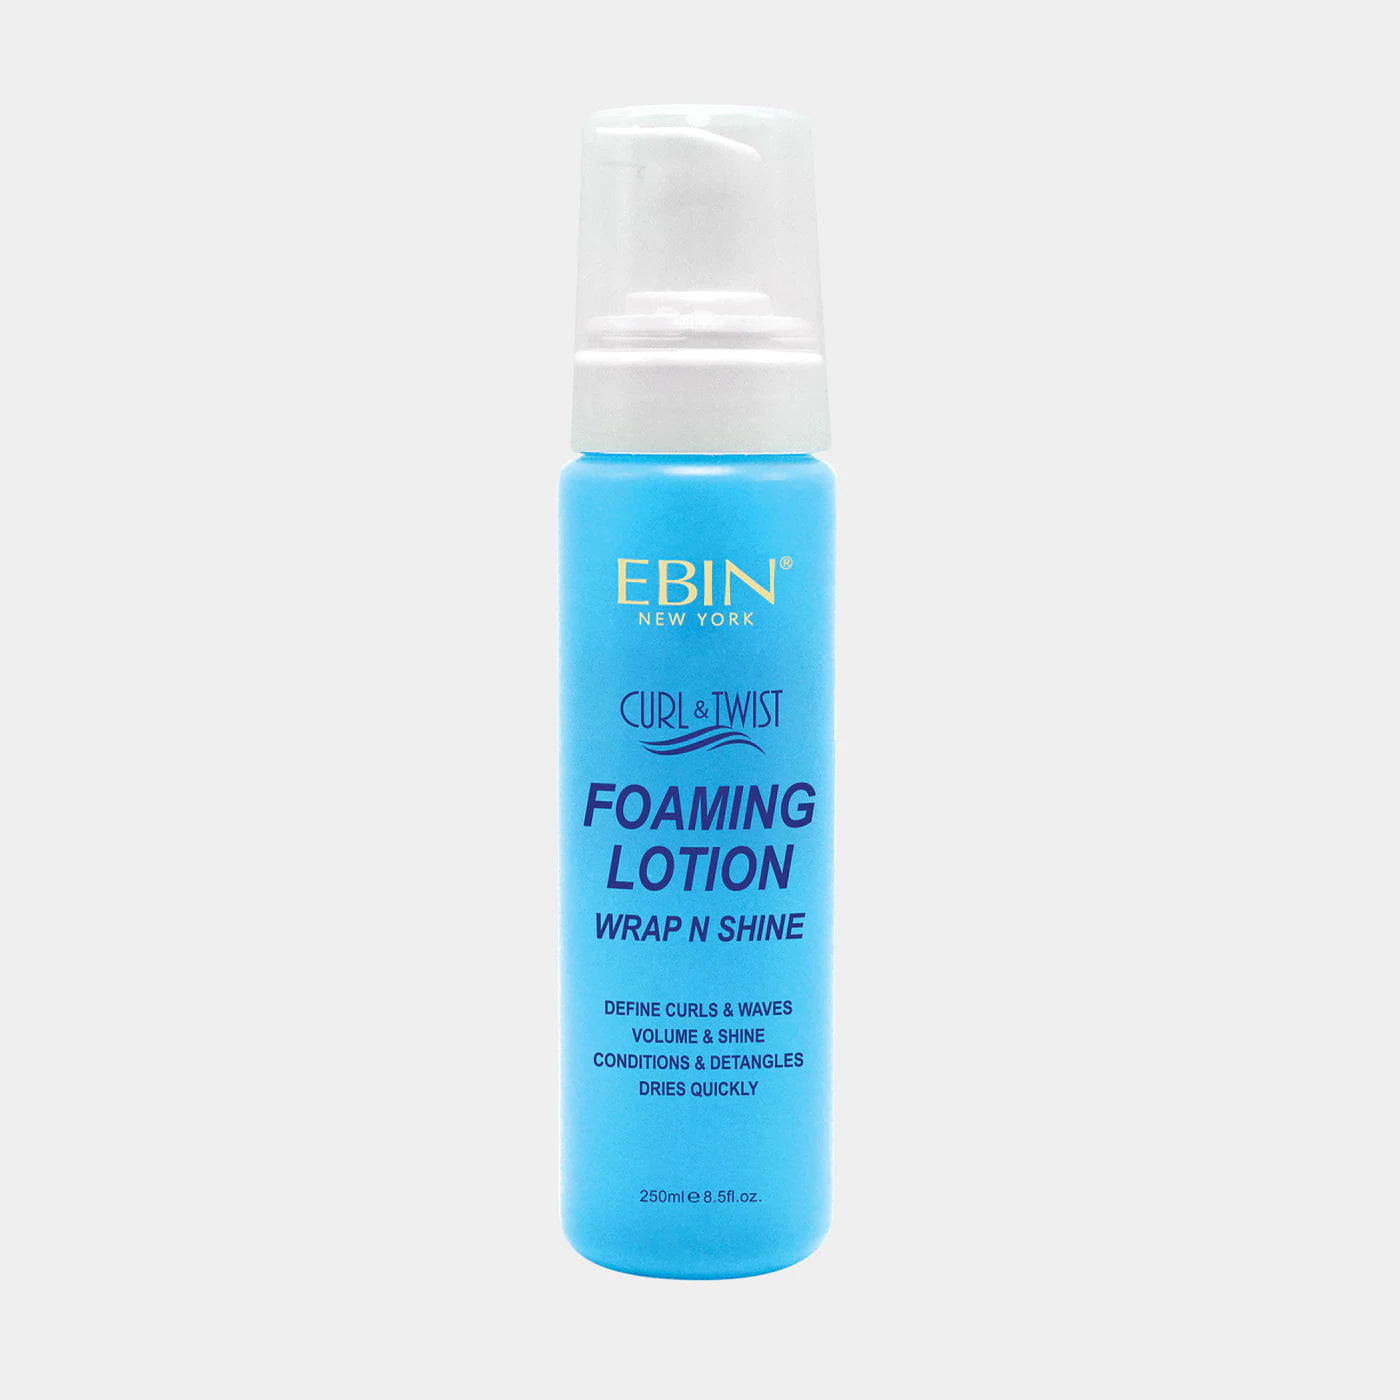 Ebin - Wonder Lace Bond Lace Melt Spray- Keratin 6.34oz